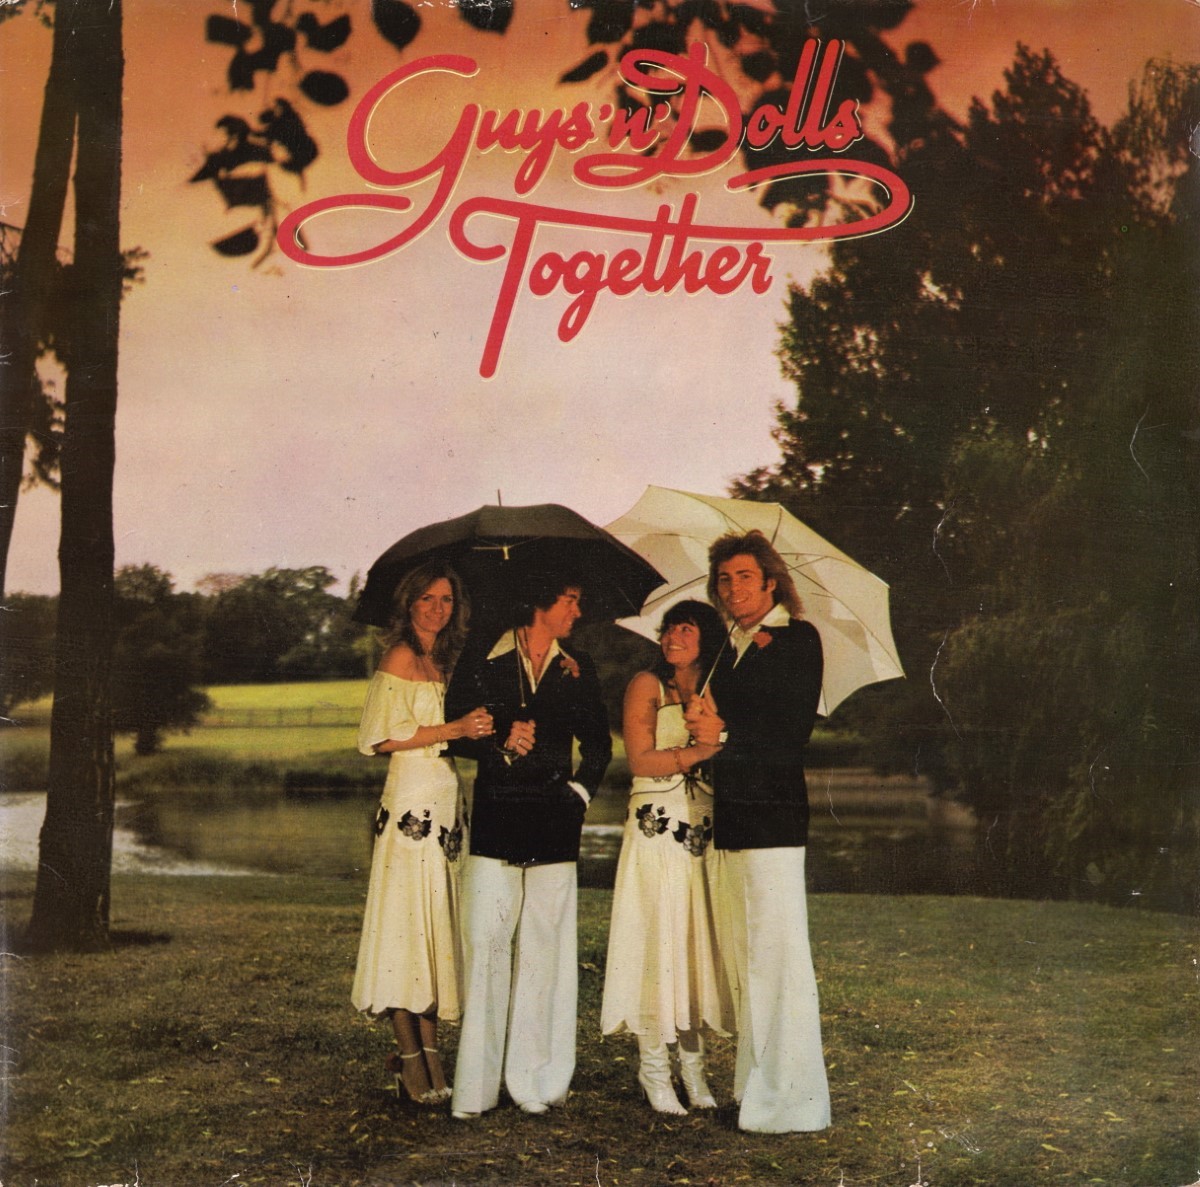 Guys 'n' Dolls - Together (1977)